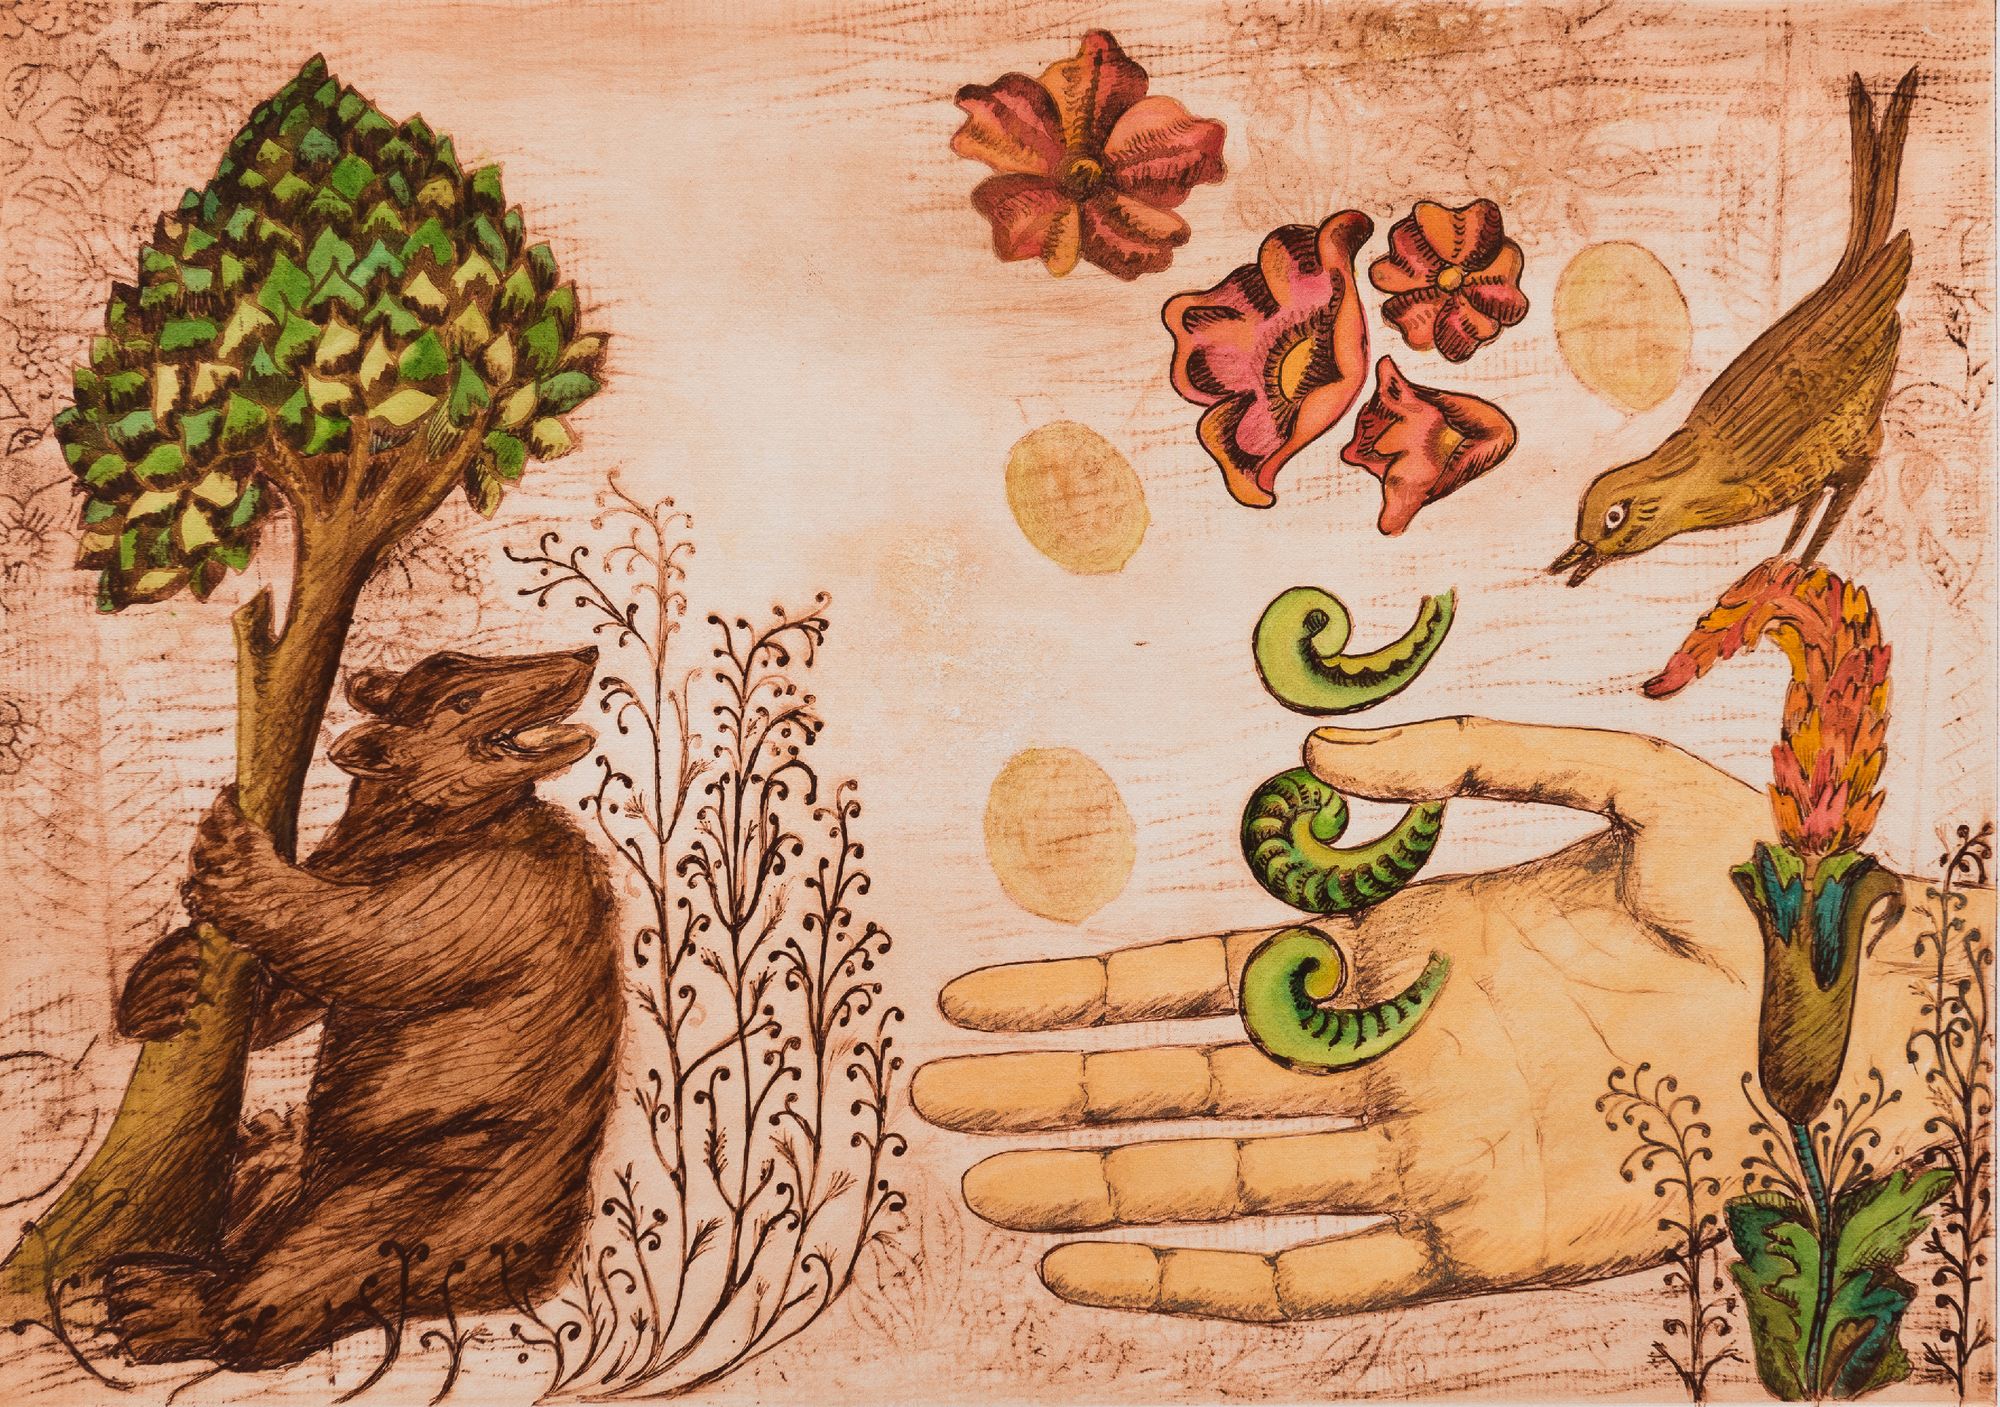 A print featuring a bear climbing a tree, a human hand, conch shells, a bird and flowers